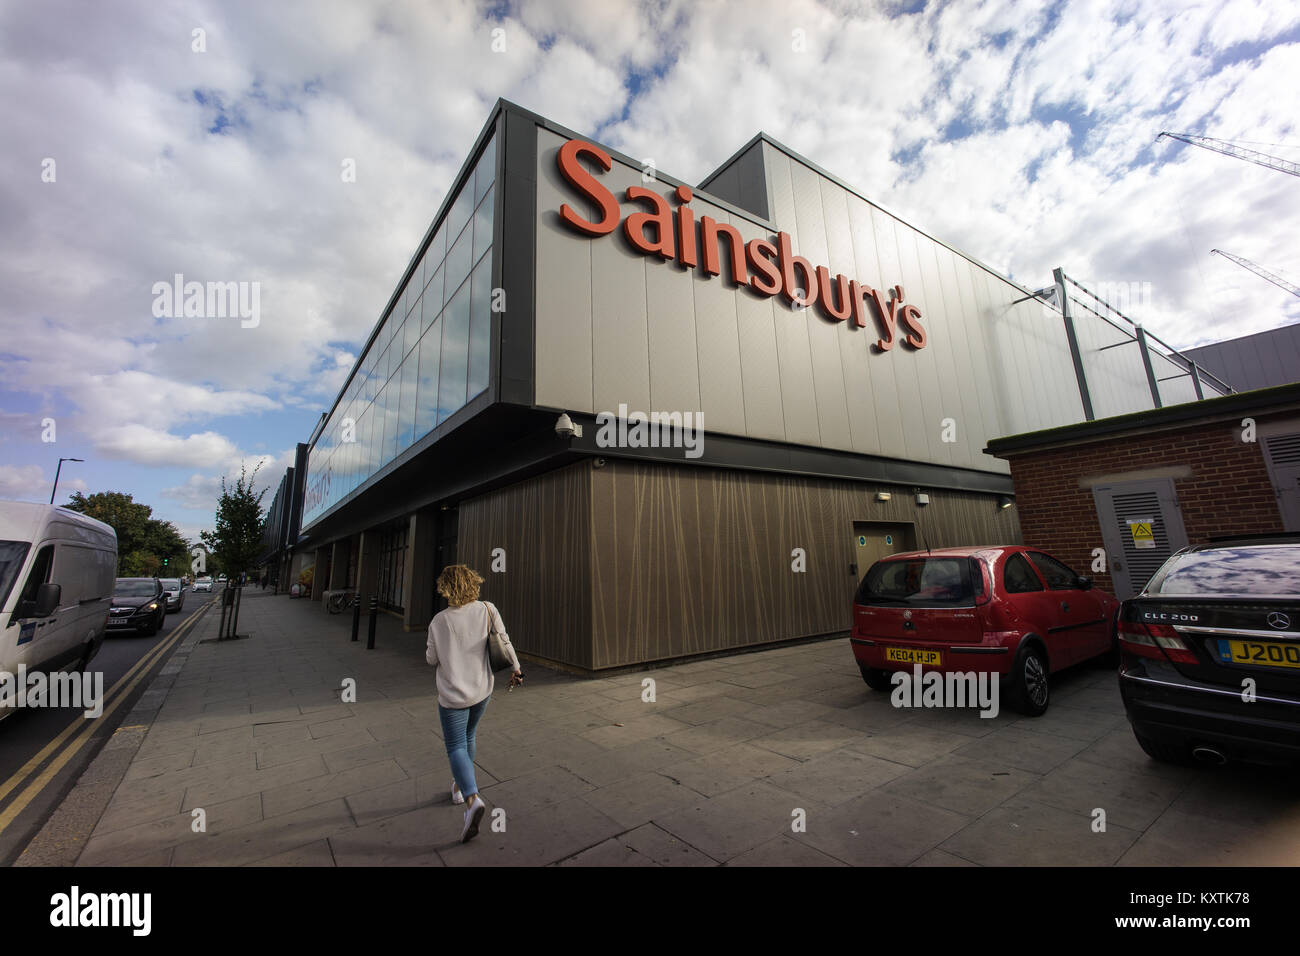 Supermarché Sainsbury's, London Borough of Haringey Banque D'Images